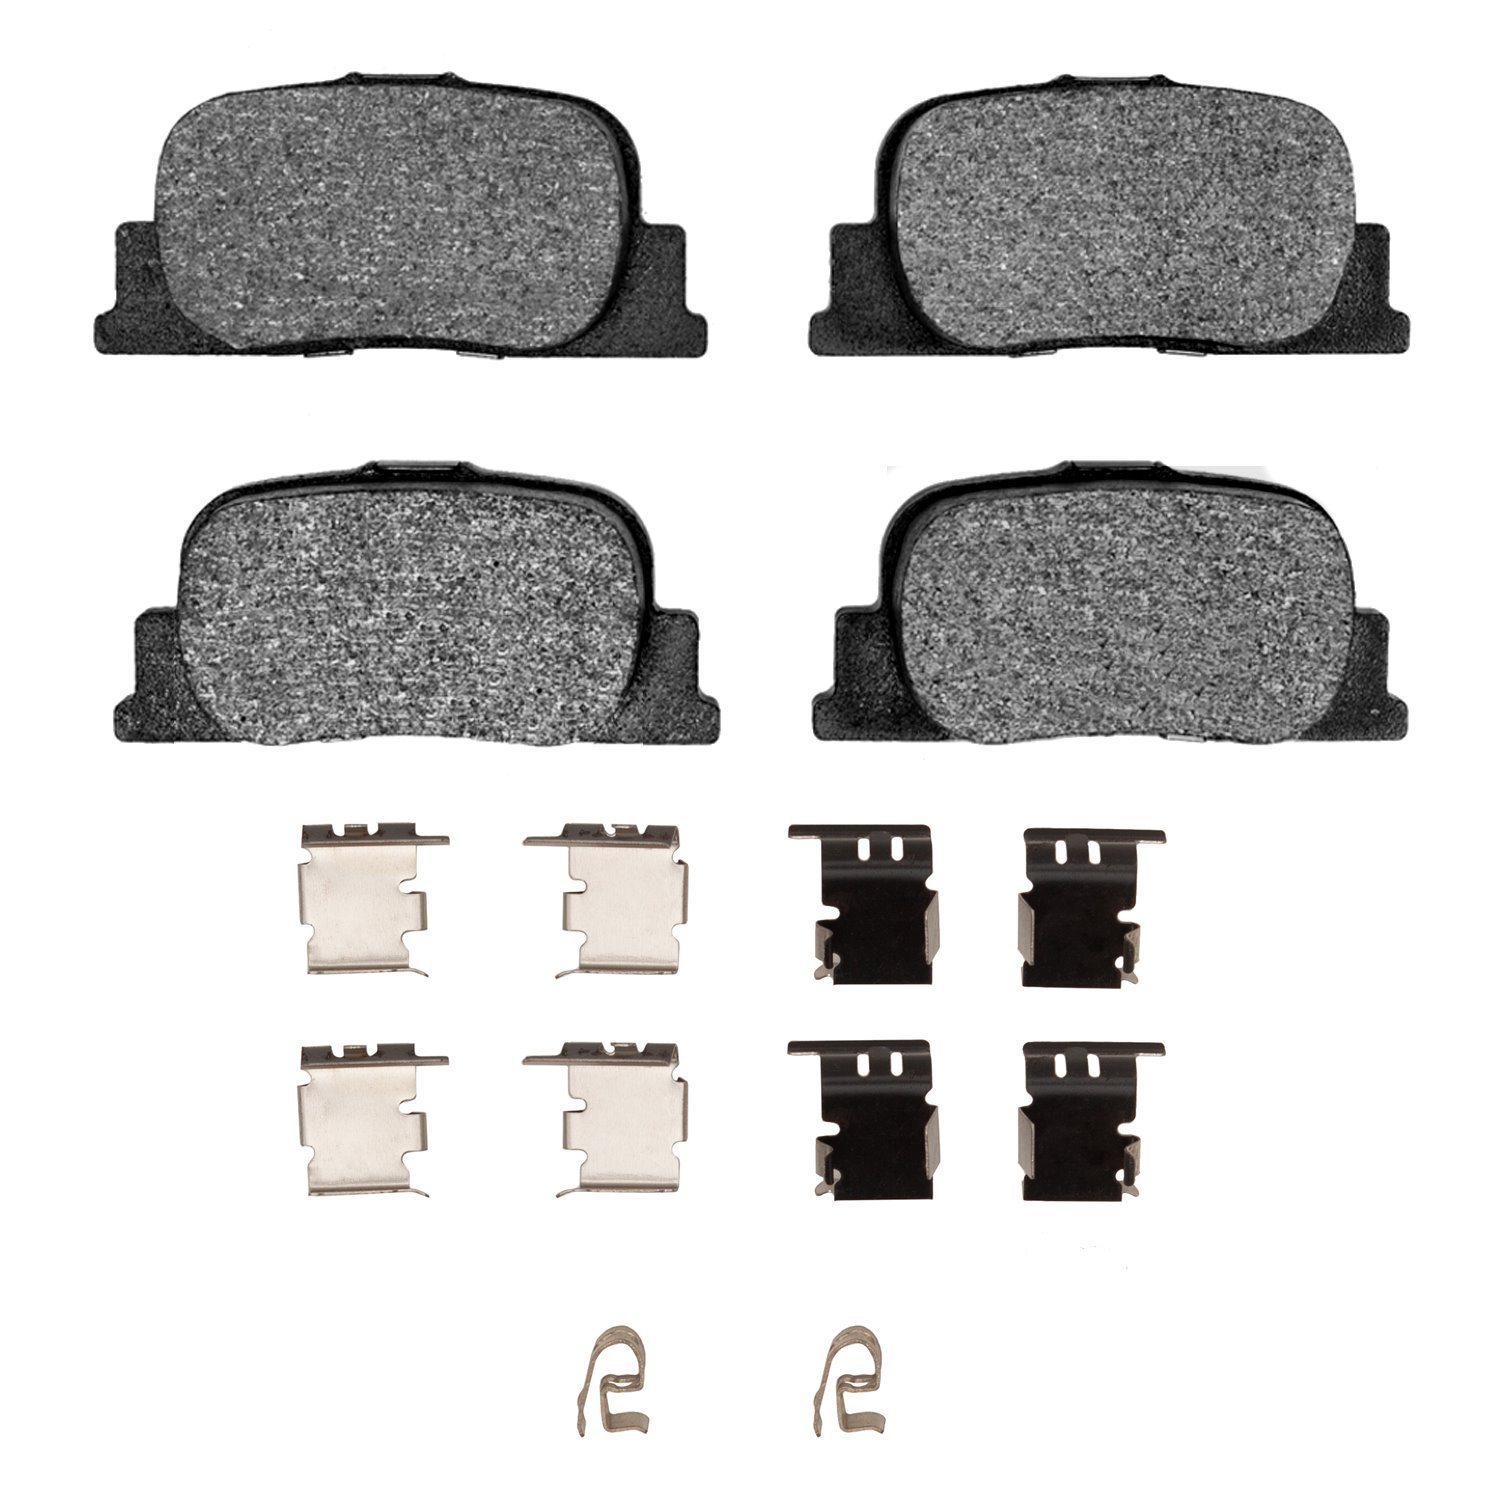 1551-0835-01 5000 Advanced Ceramic Brake Pads & Hardware Kit, 2000-2010 Multiple Makes/Models, Position: Rear